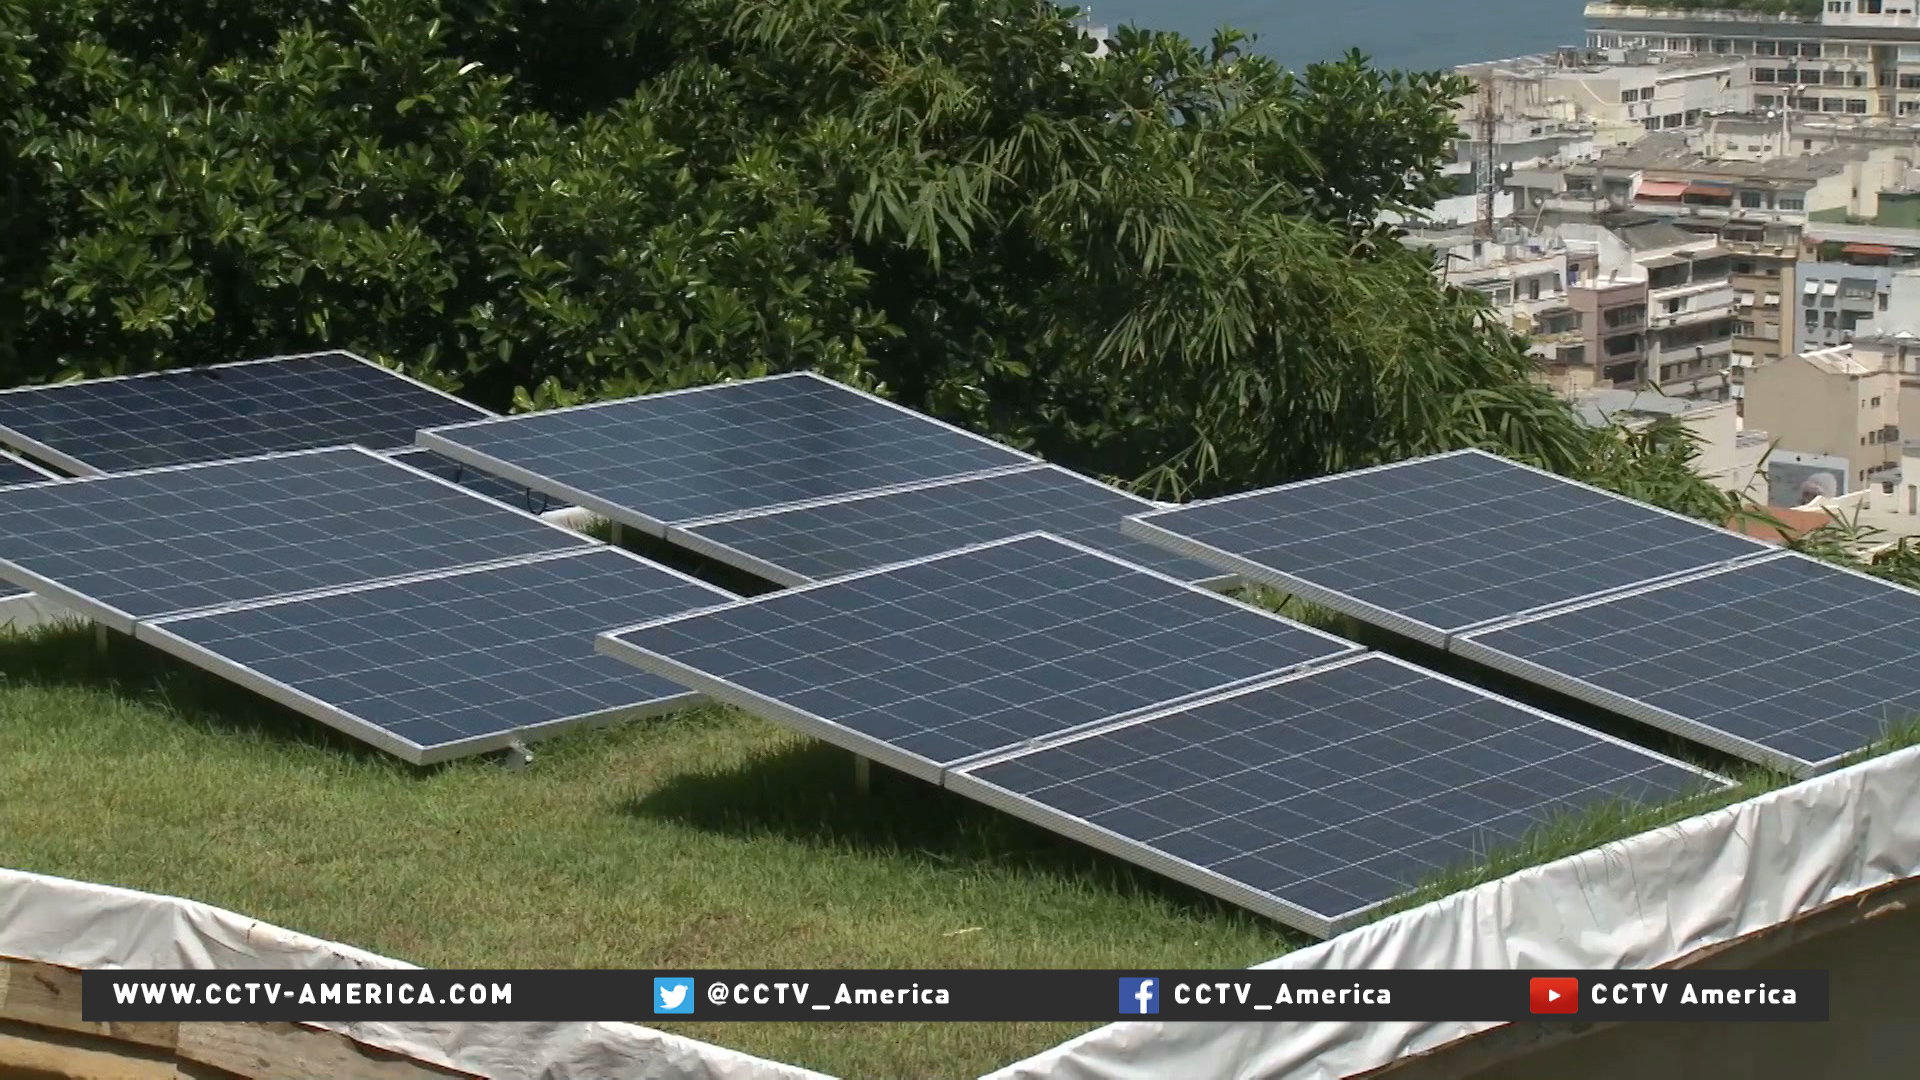 Rio develops solar resources to meet energy demand